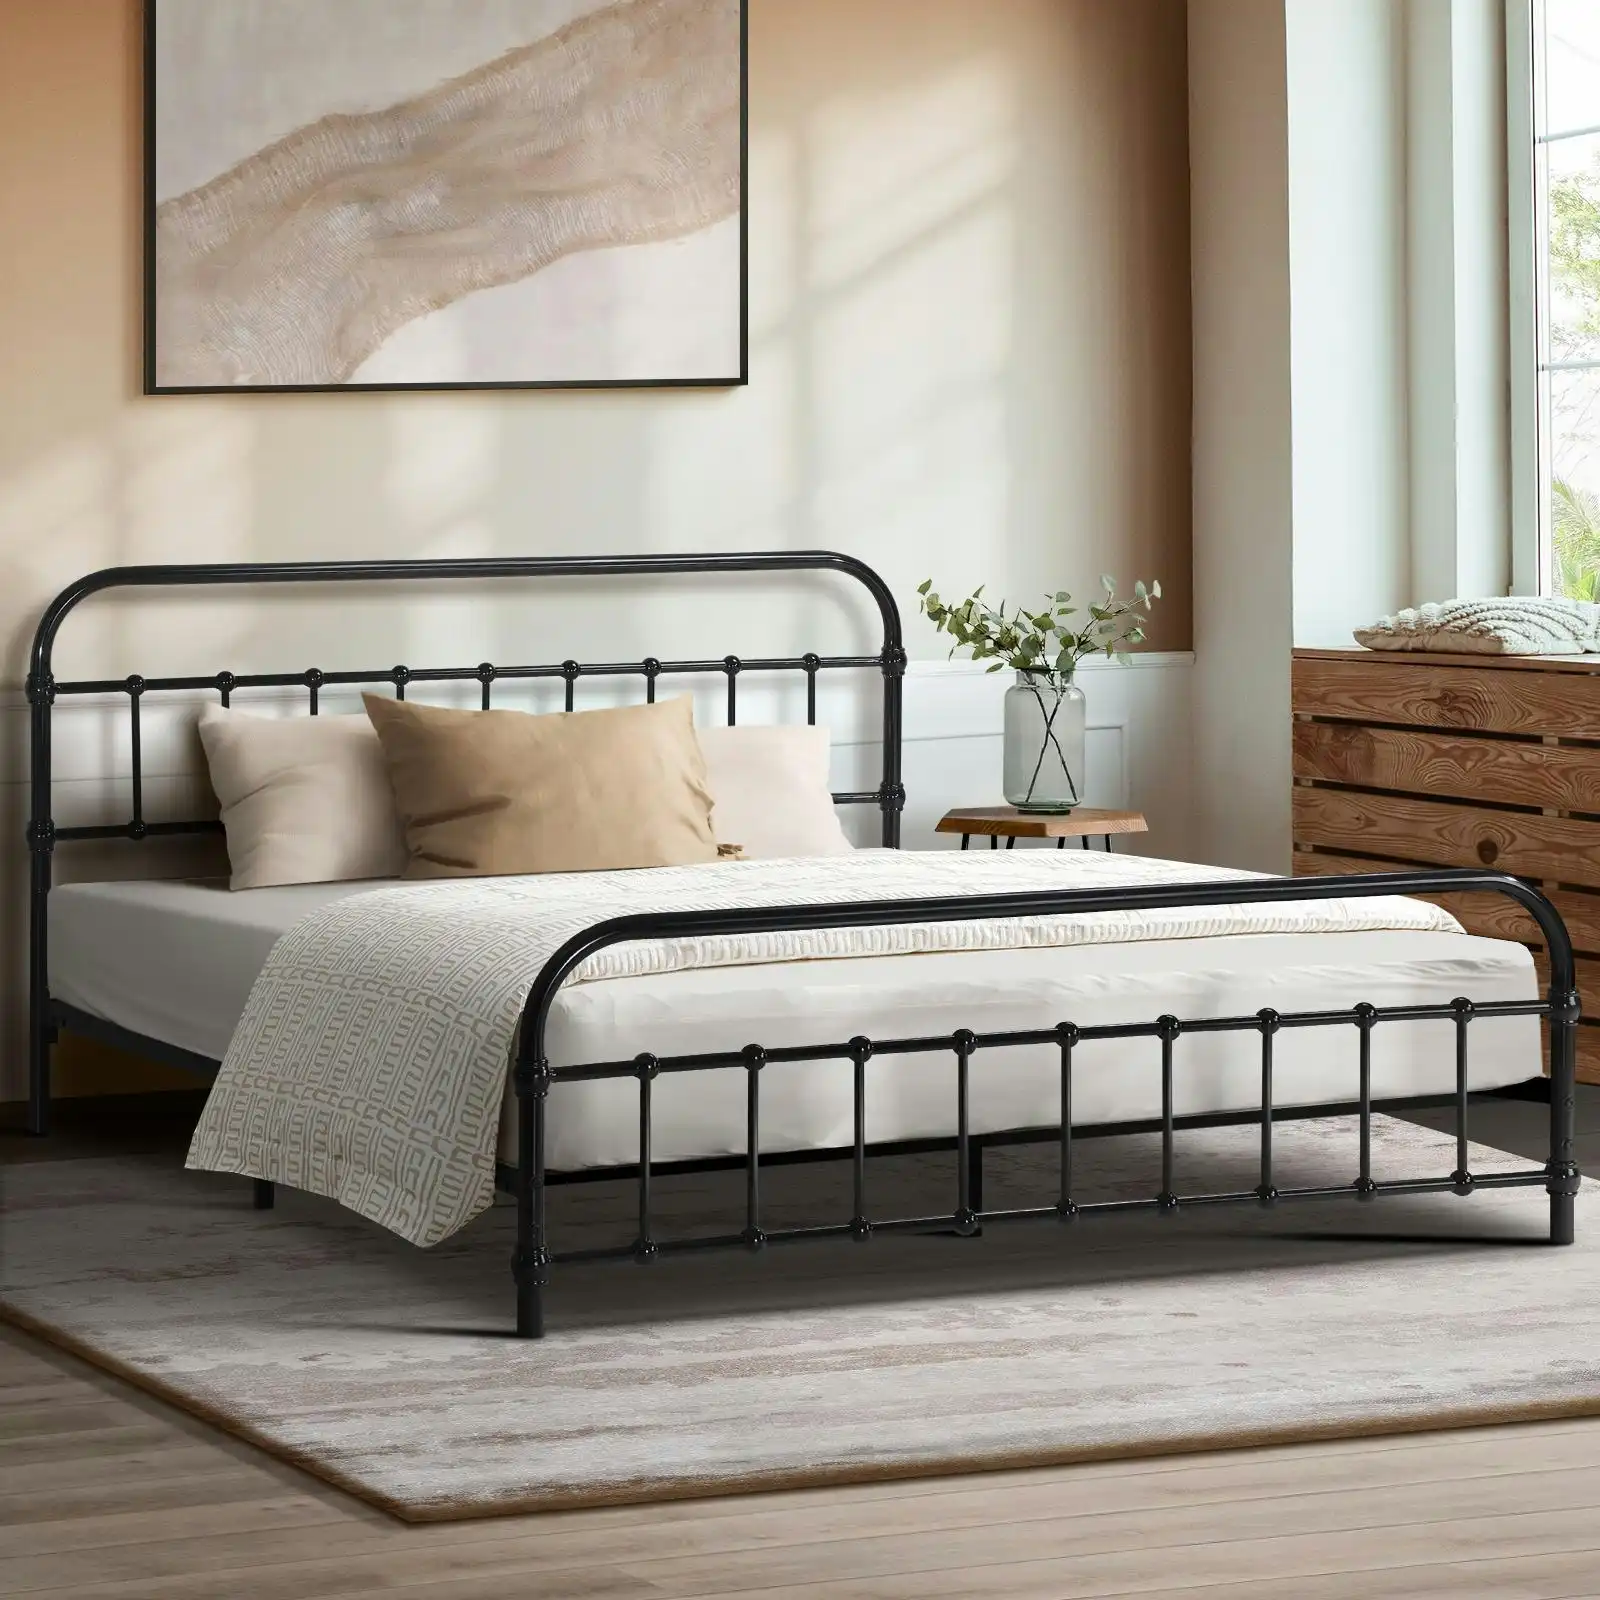 Oikiture Metal Bed Frame Double Size Bed Base Platform